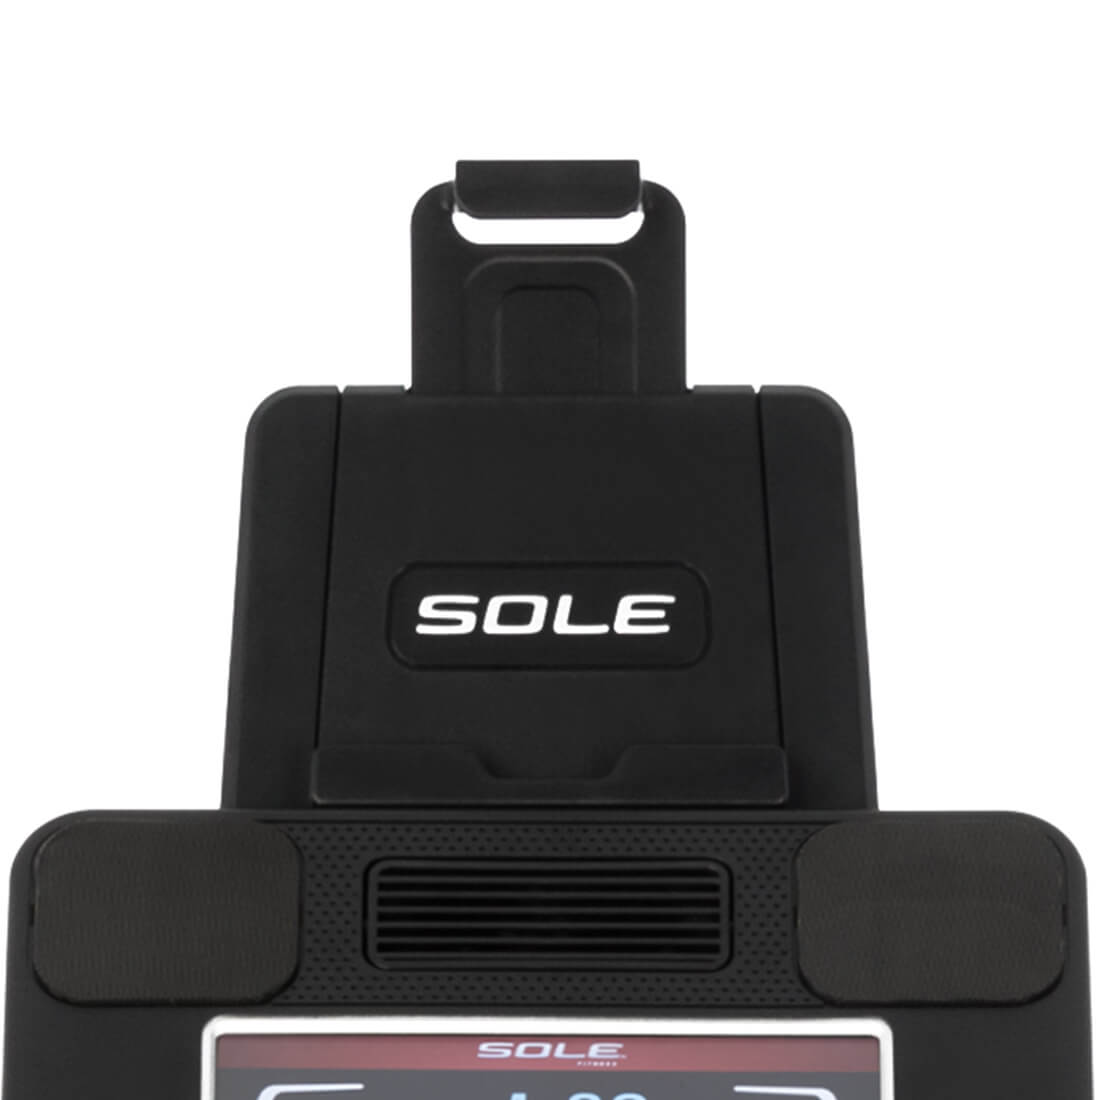 Sole TT8 (AC) Commercial Treadmill - Display Unit